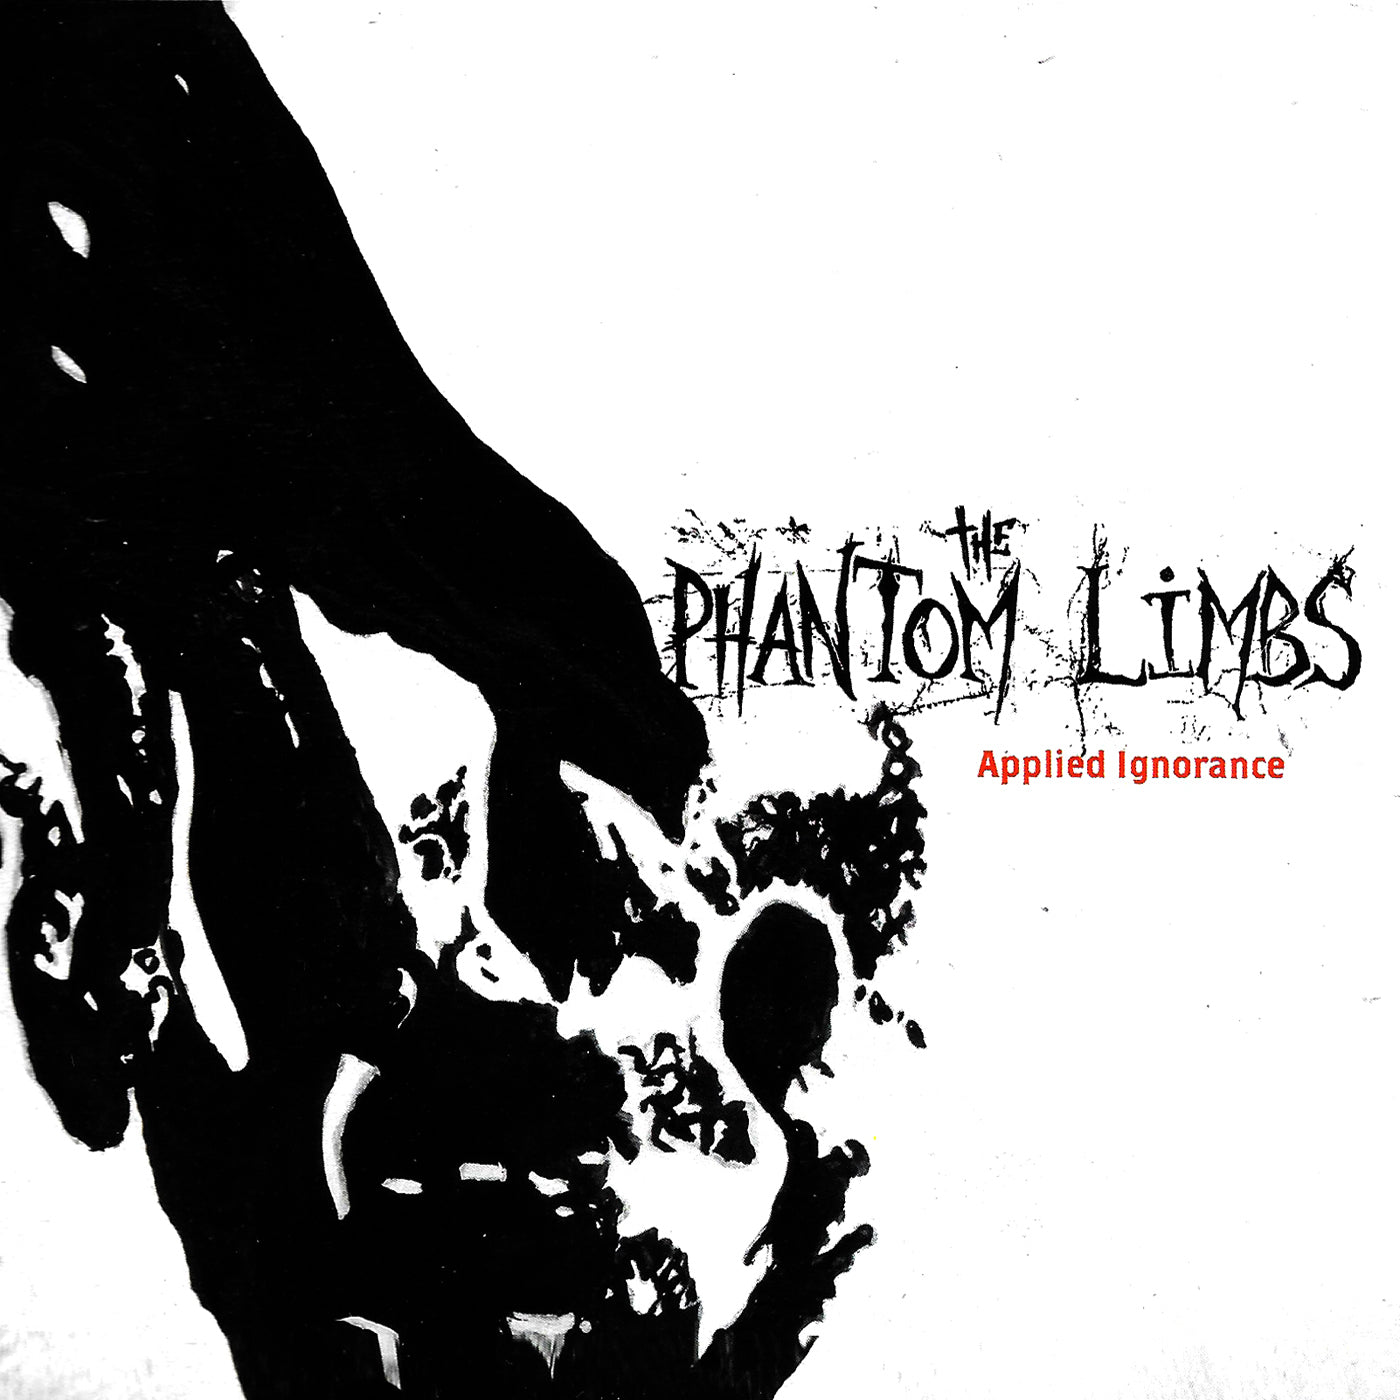 v263 - The Phantom Limbs - "Applied Ignorance"